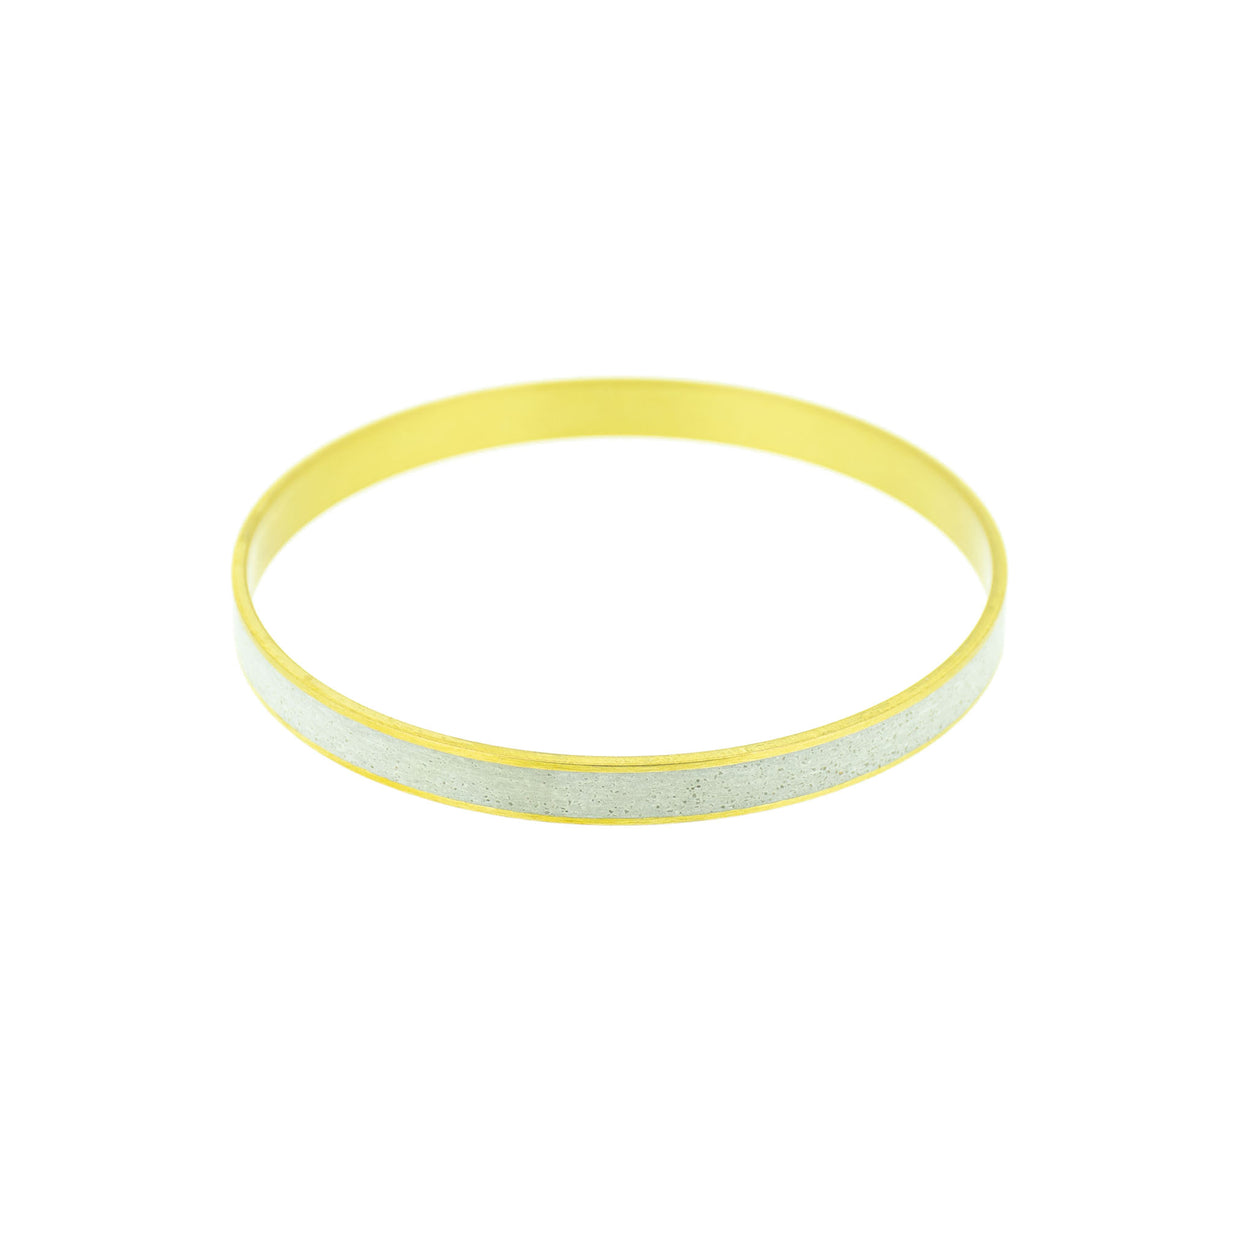 Moonwalk White Pigmented Concrete Brass Bangle Bracelet Standard Gauge 1/4" or 6mm width